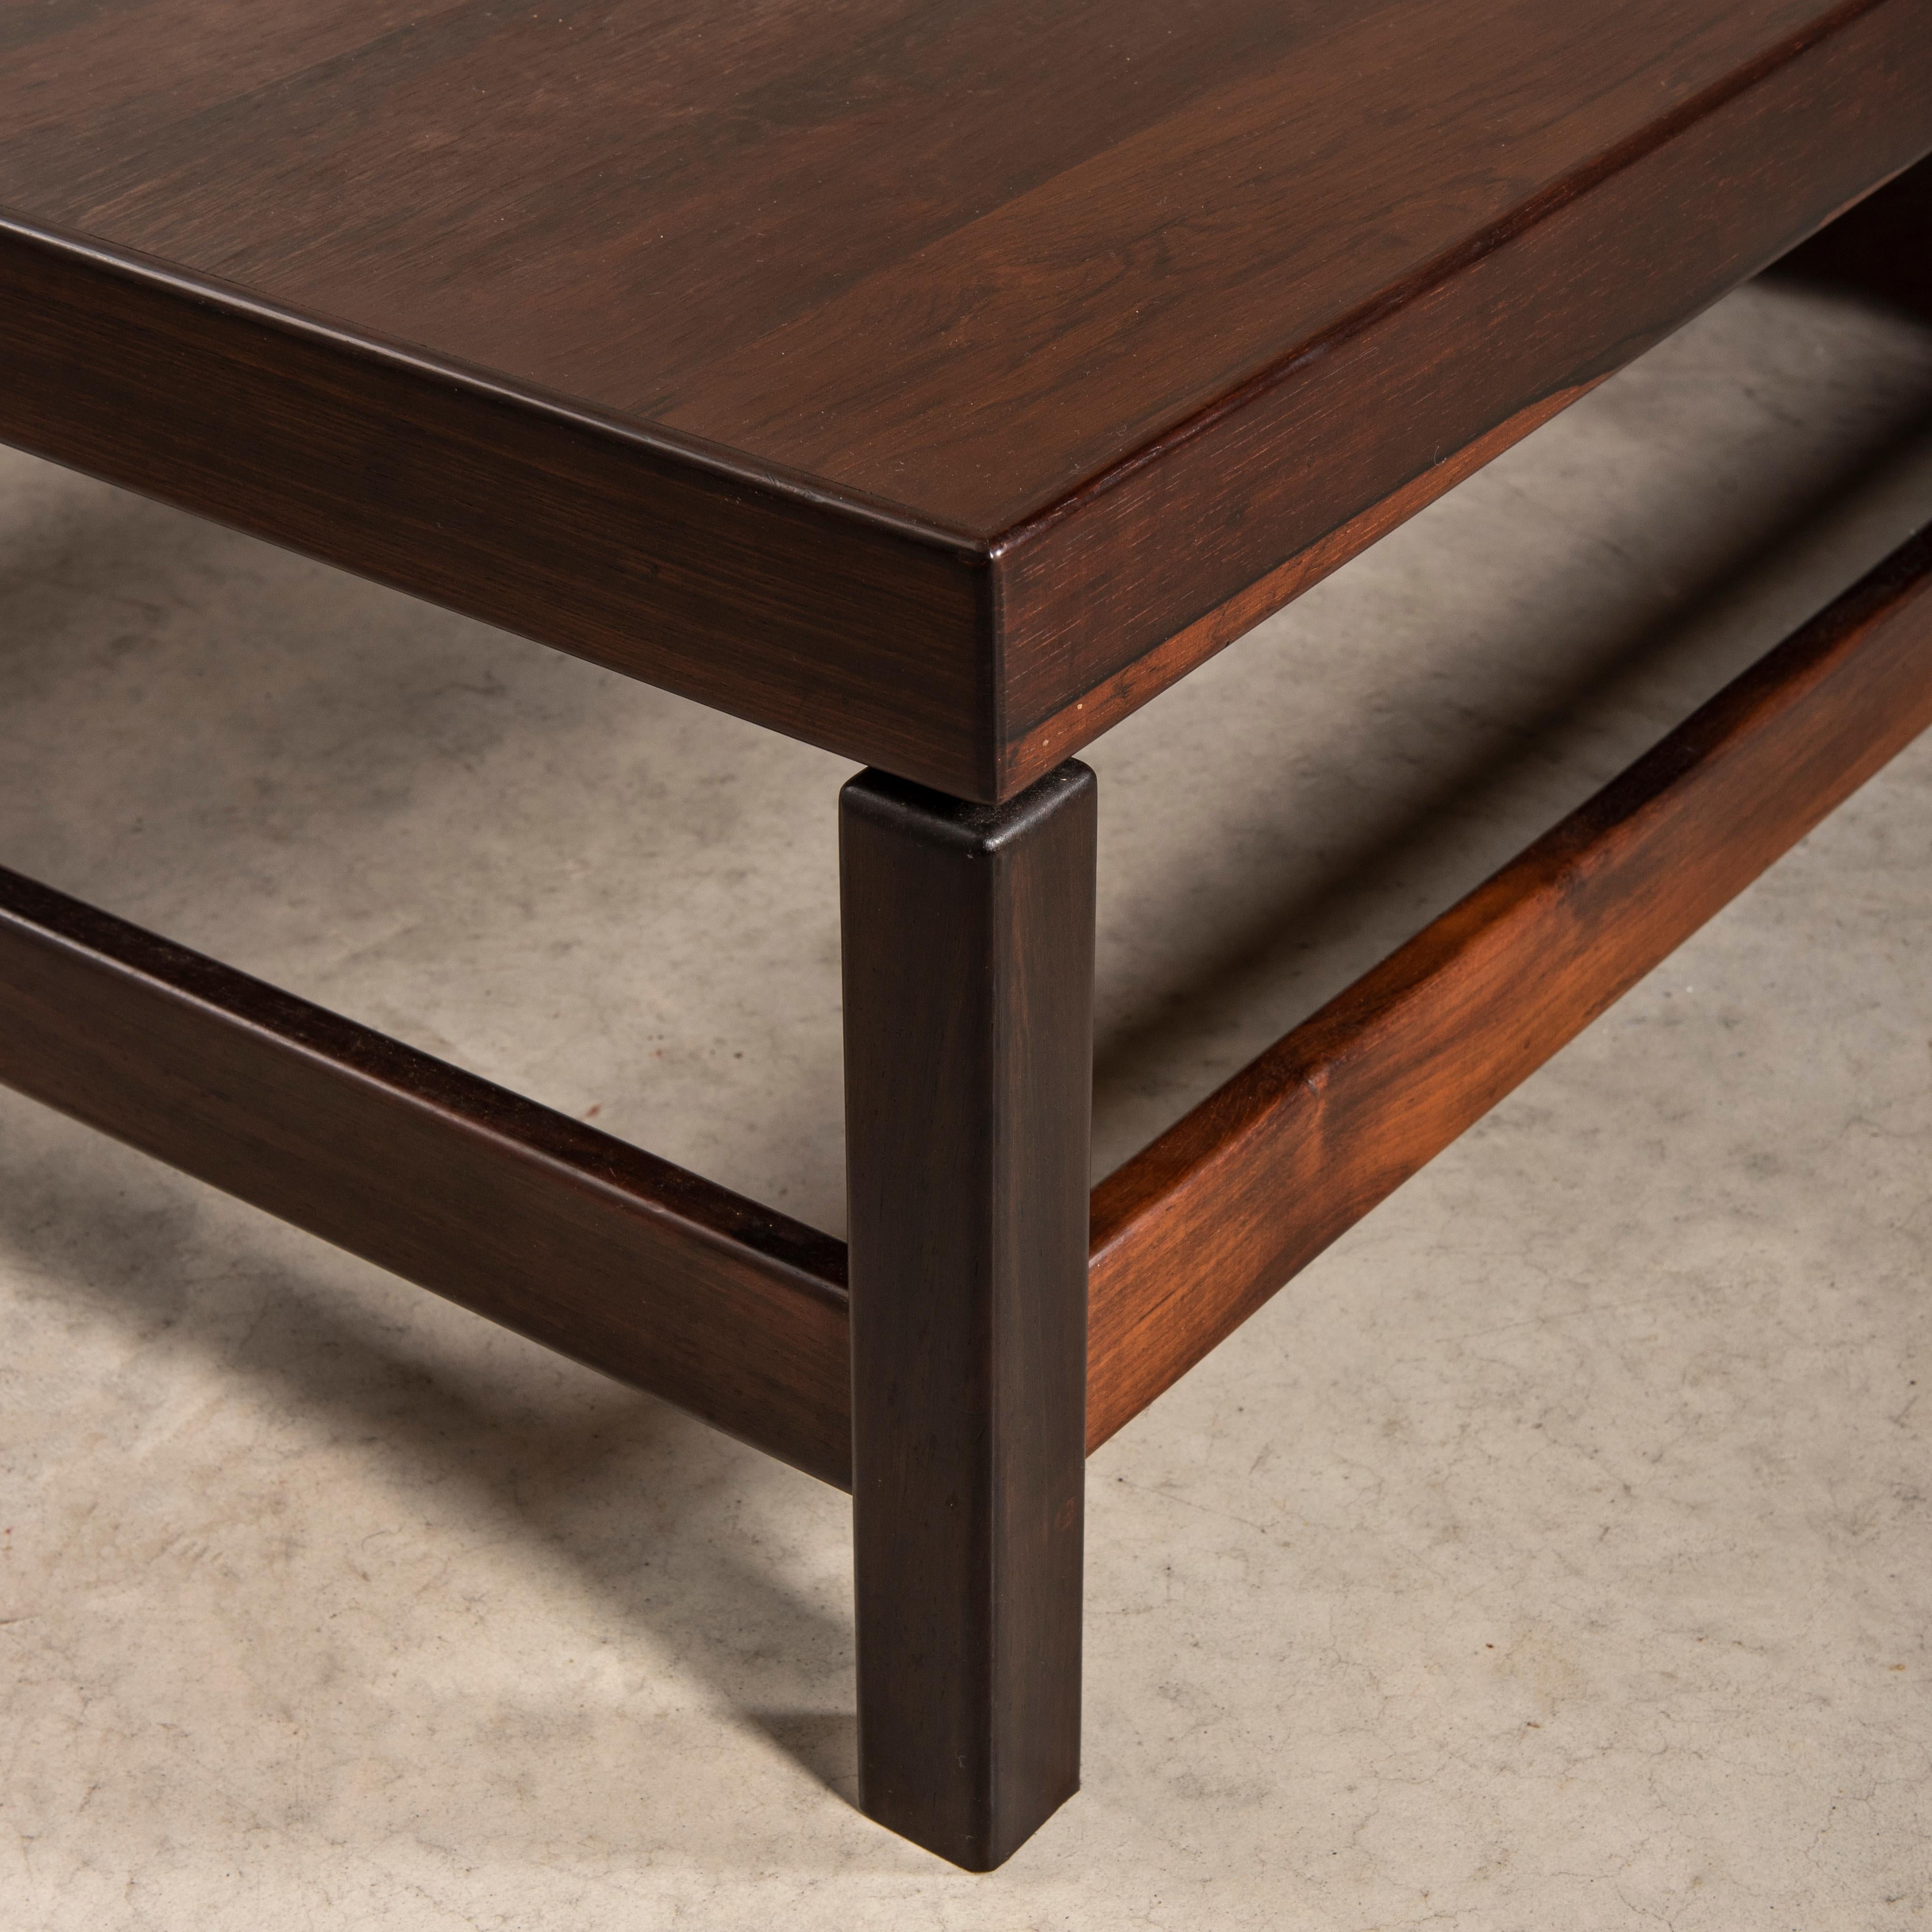 Minimalist Rectangular Coffee Table in Solid Wood, Brazilian Mid-century Modern  For Sale 1